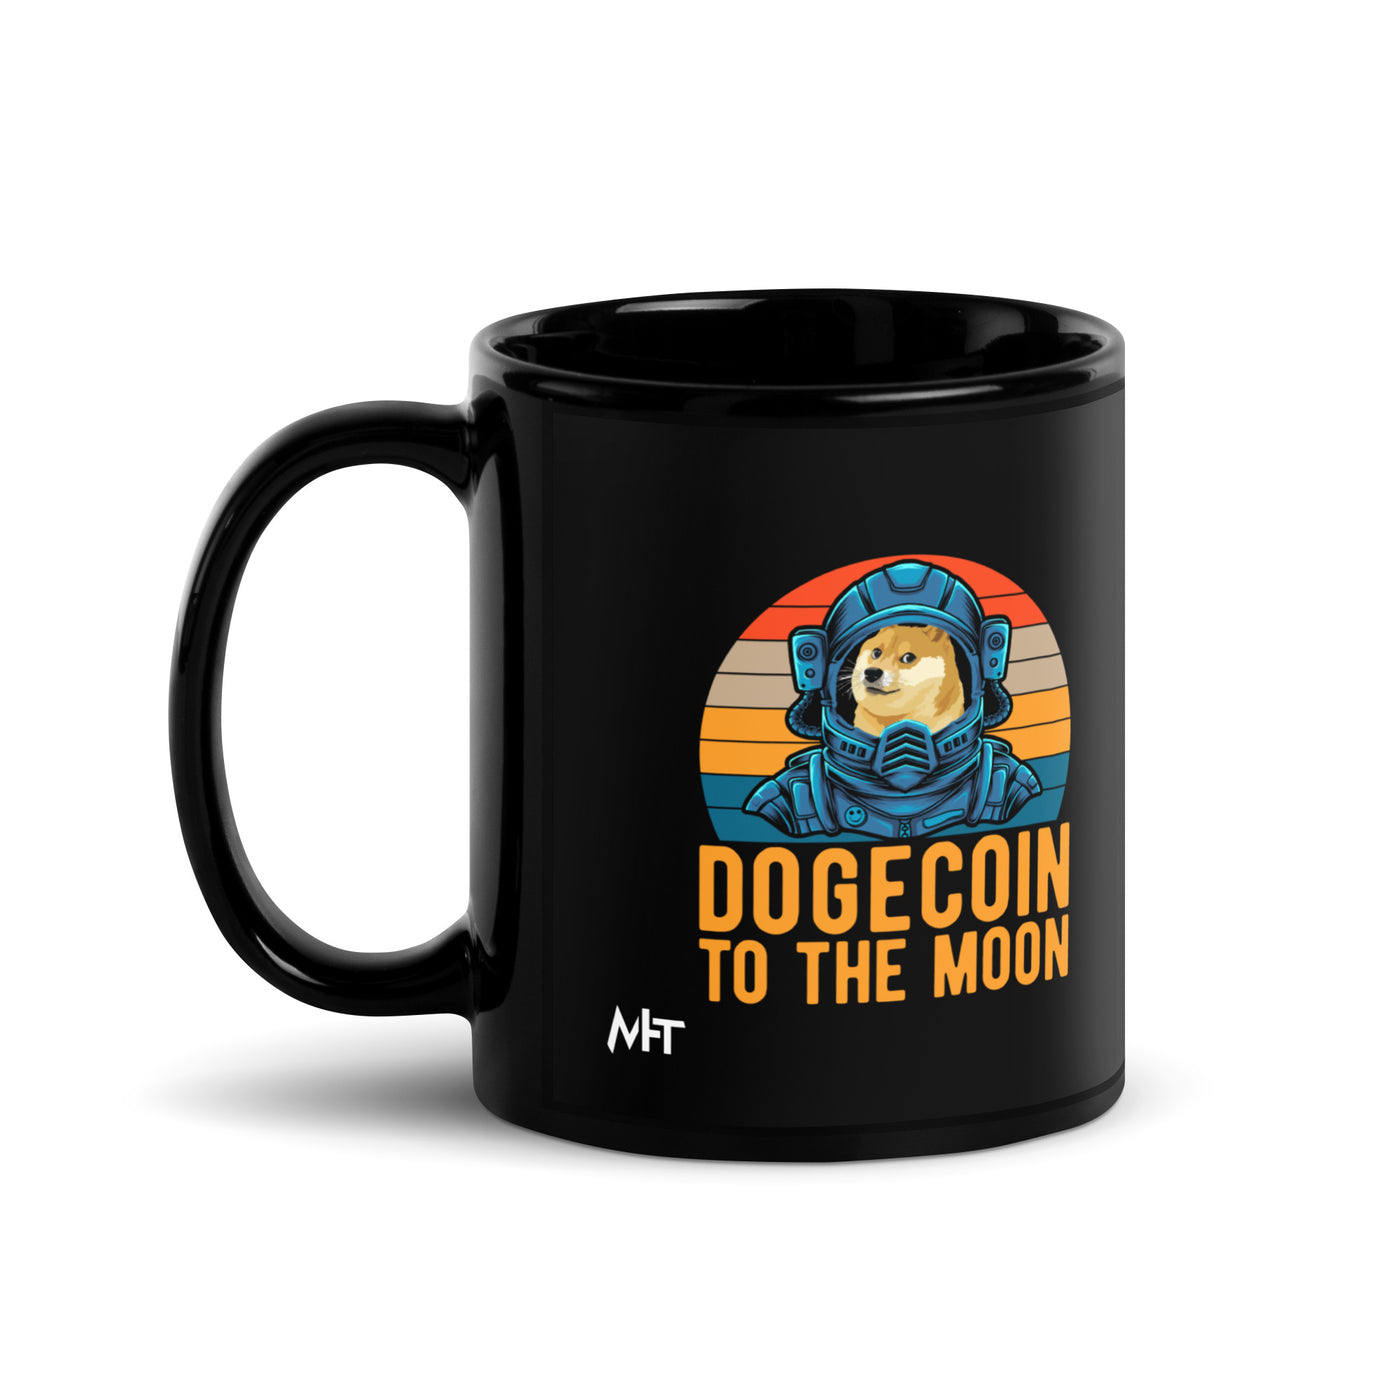 Doge Coin to the Moon - Black Glossy Mug